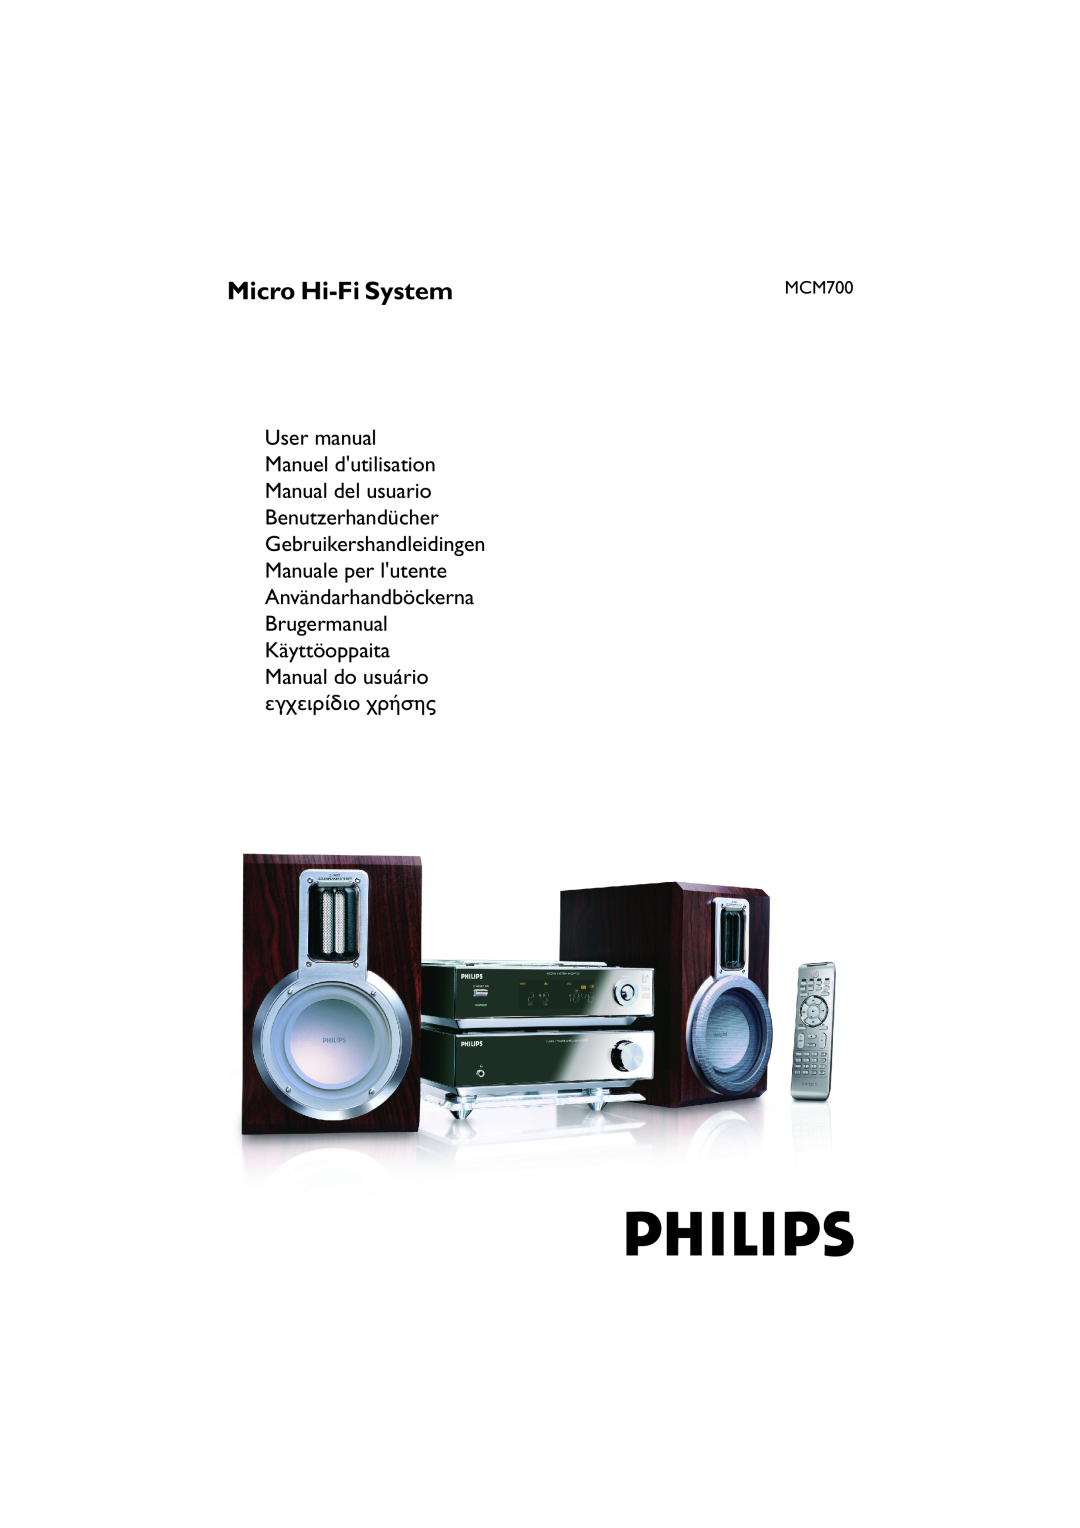 Philips MCM700 user manual Micro Hi-FiSystem, Manual do usuário 